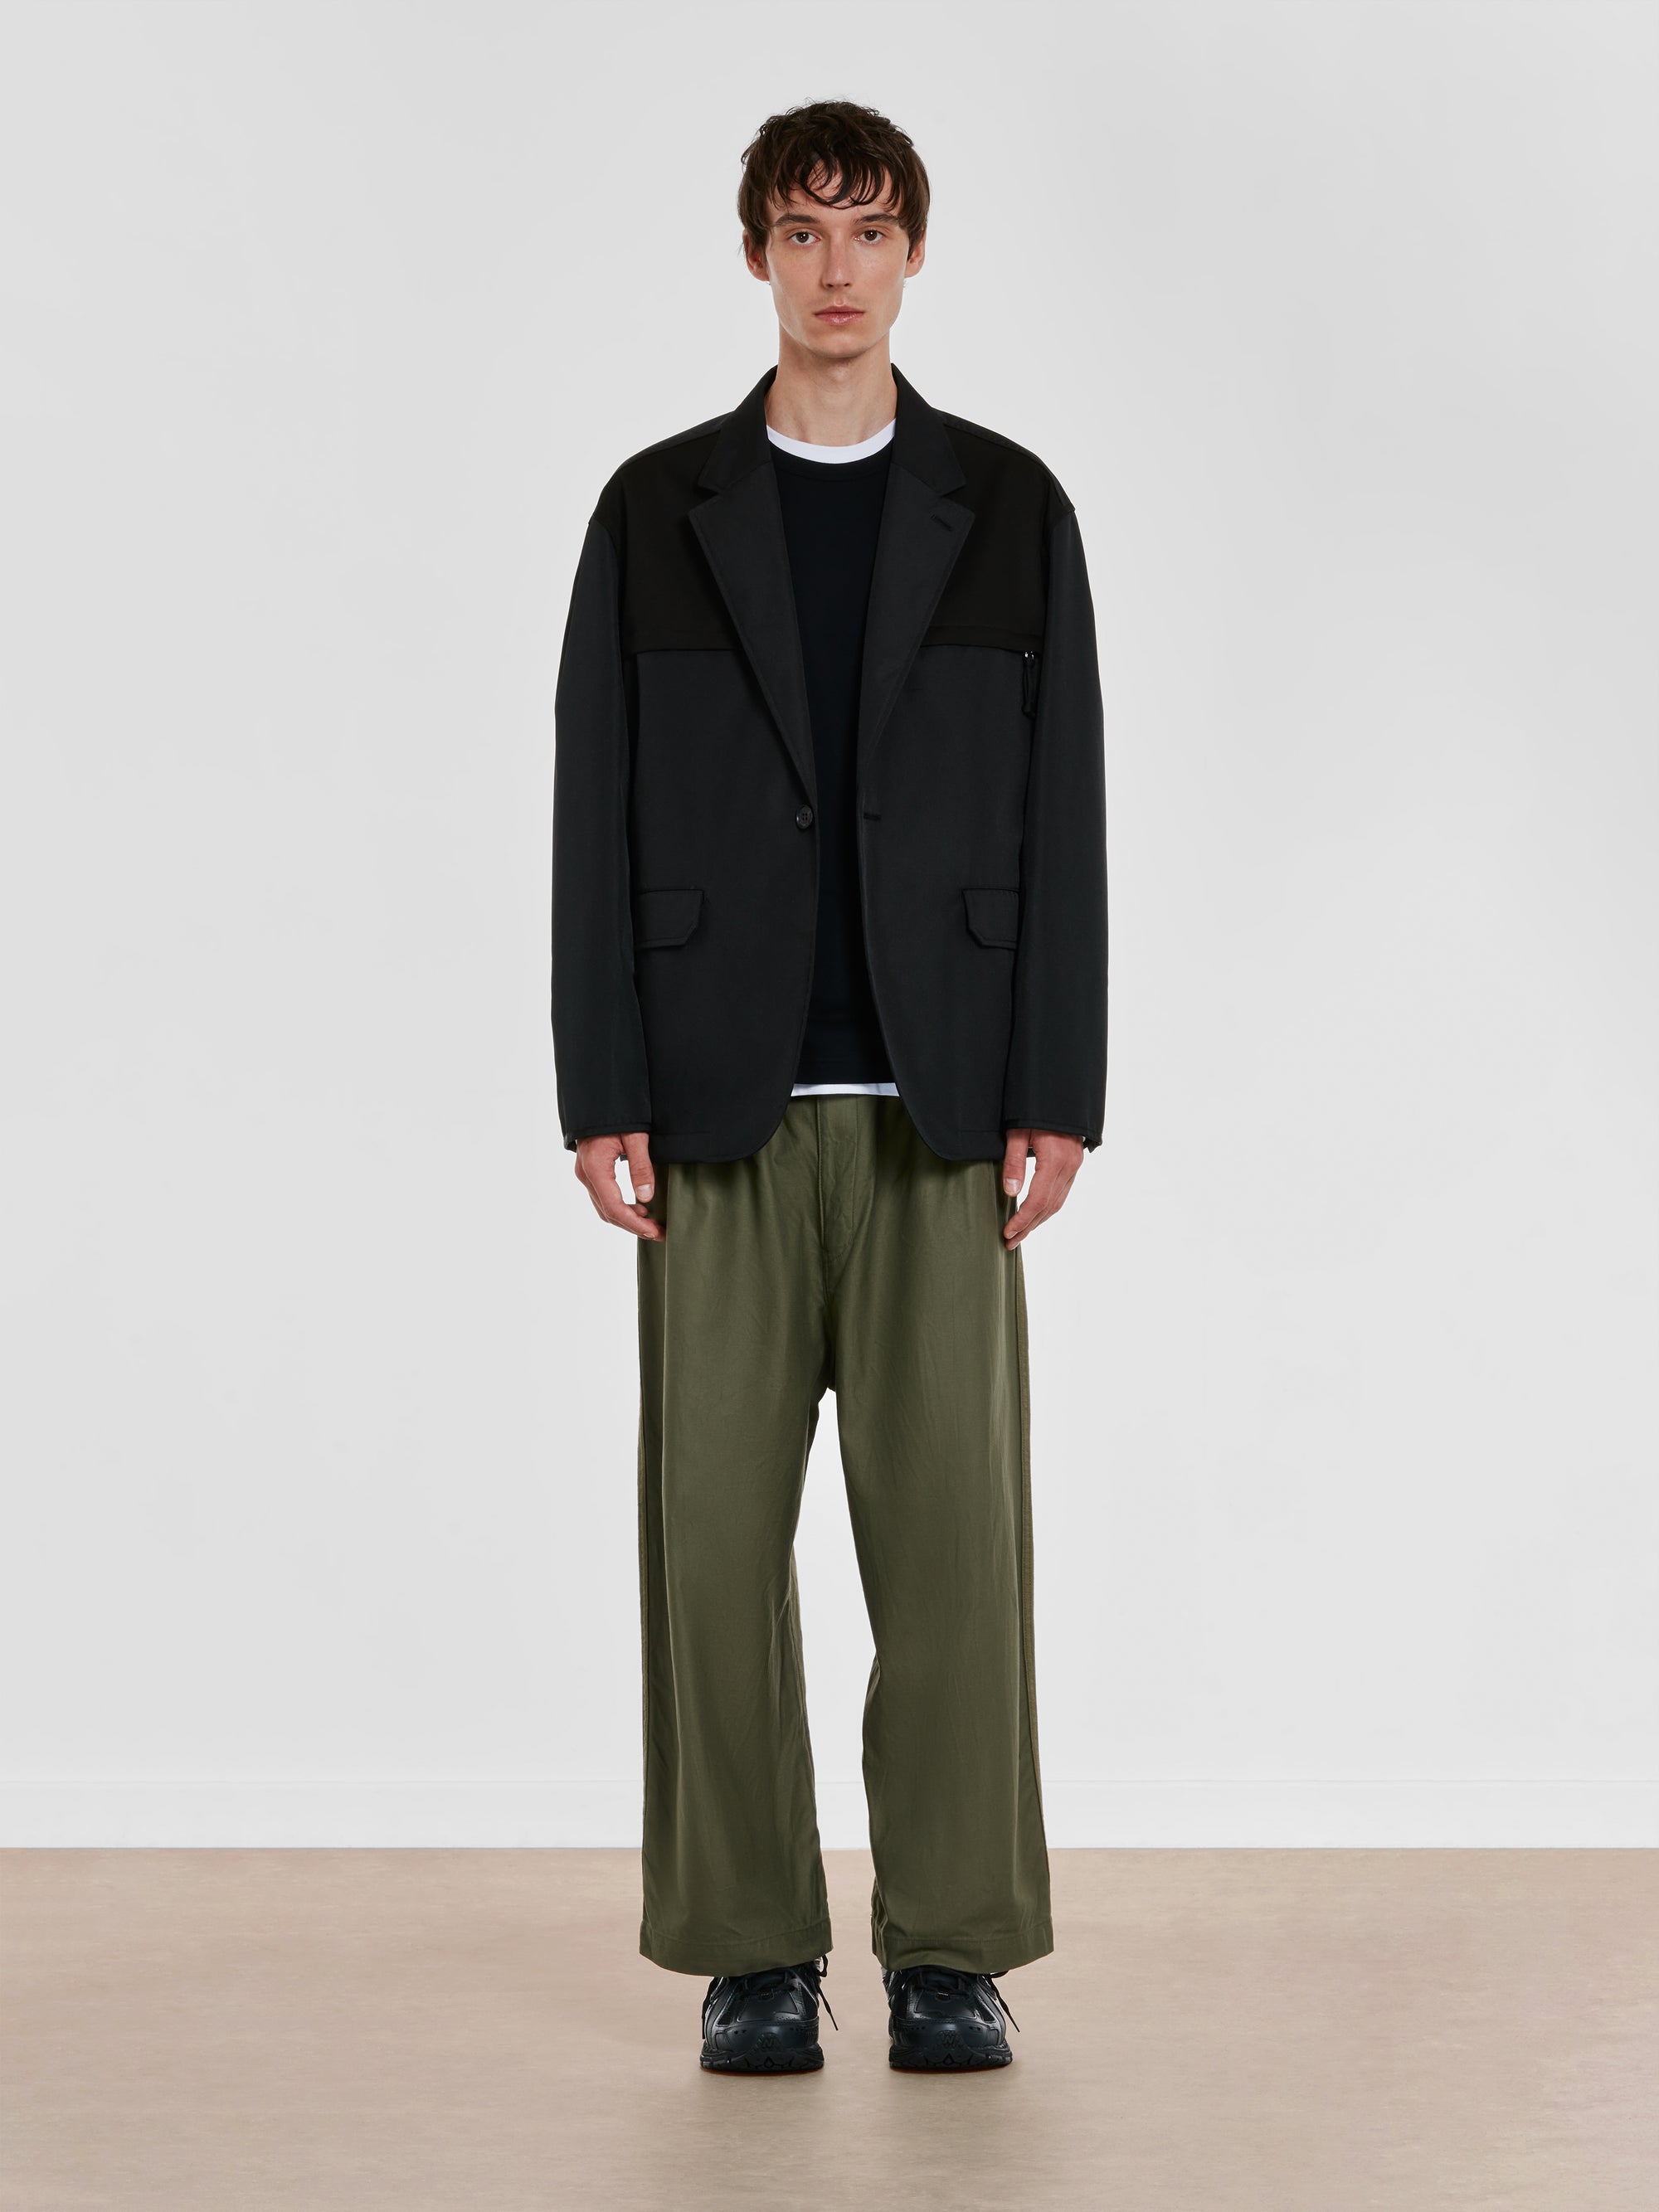 Jacket Starter Black Label Multicolour size M International in Polyester -  23927250